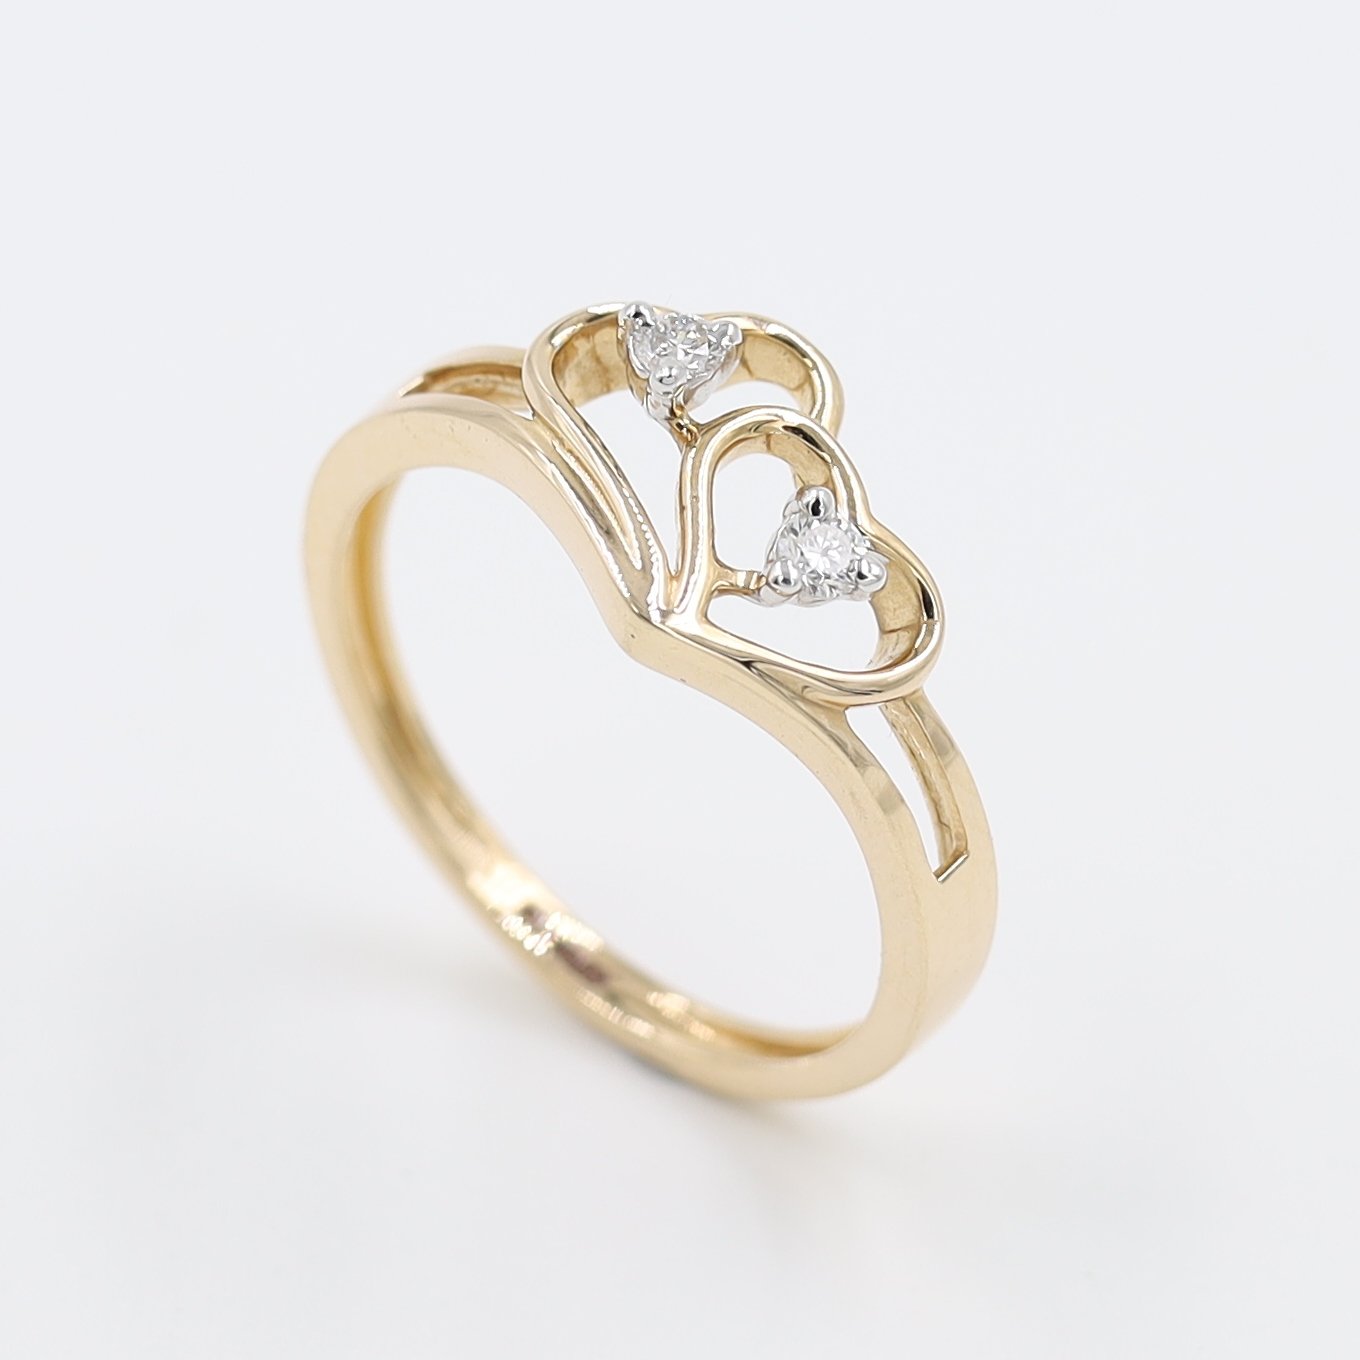 Buy quality 22k gold plain double heart shape ledies ring in Ahmedabad